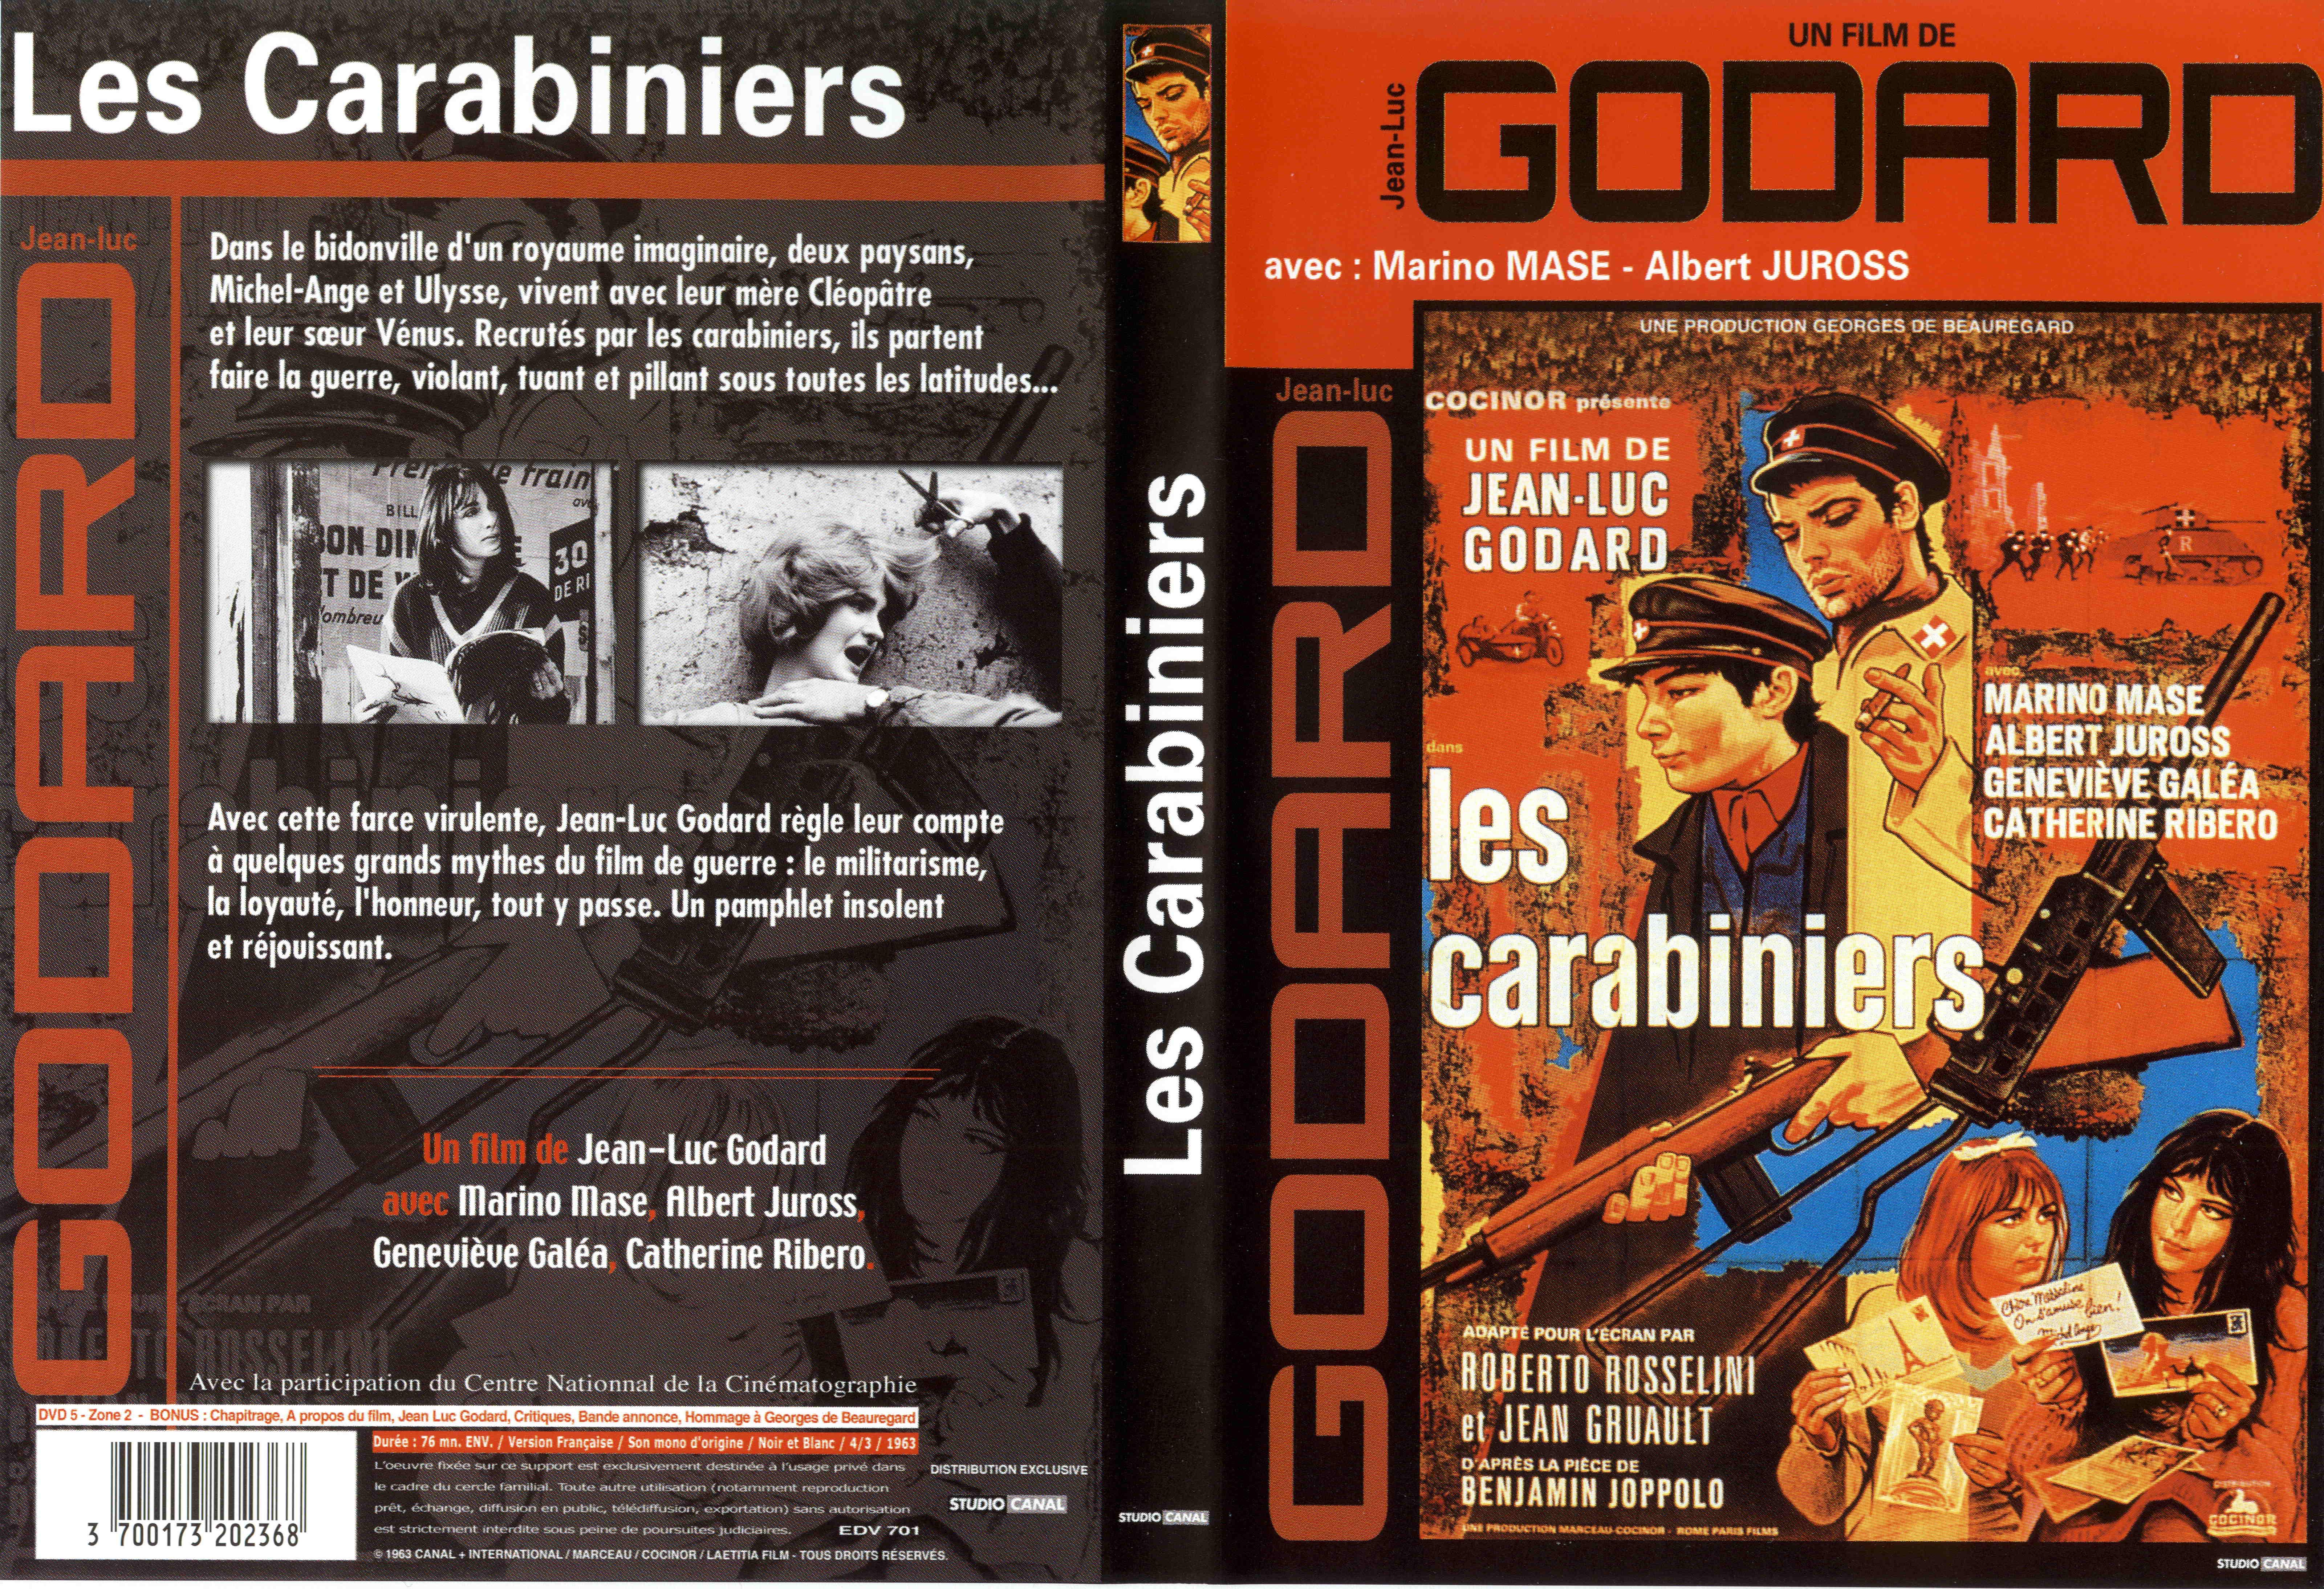 Jaquette DVD Les carabiniers